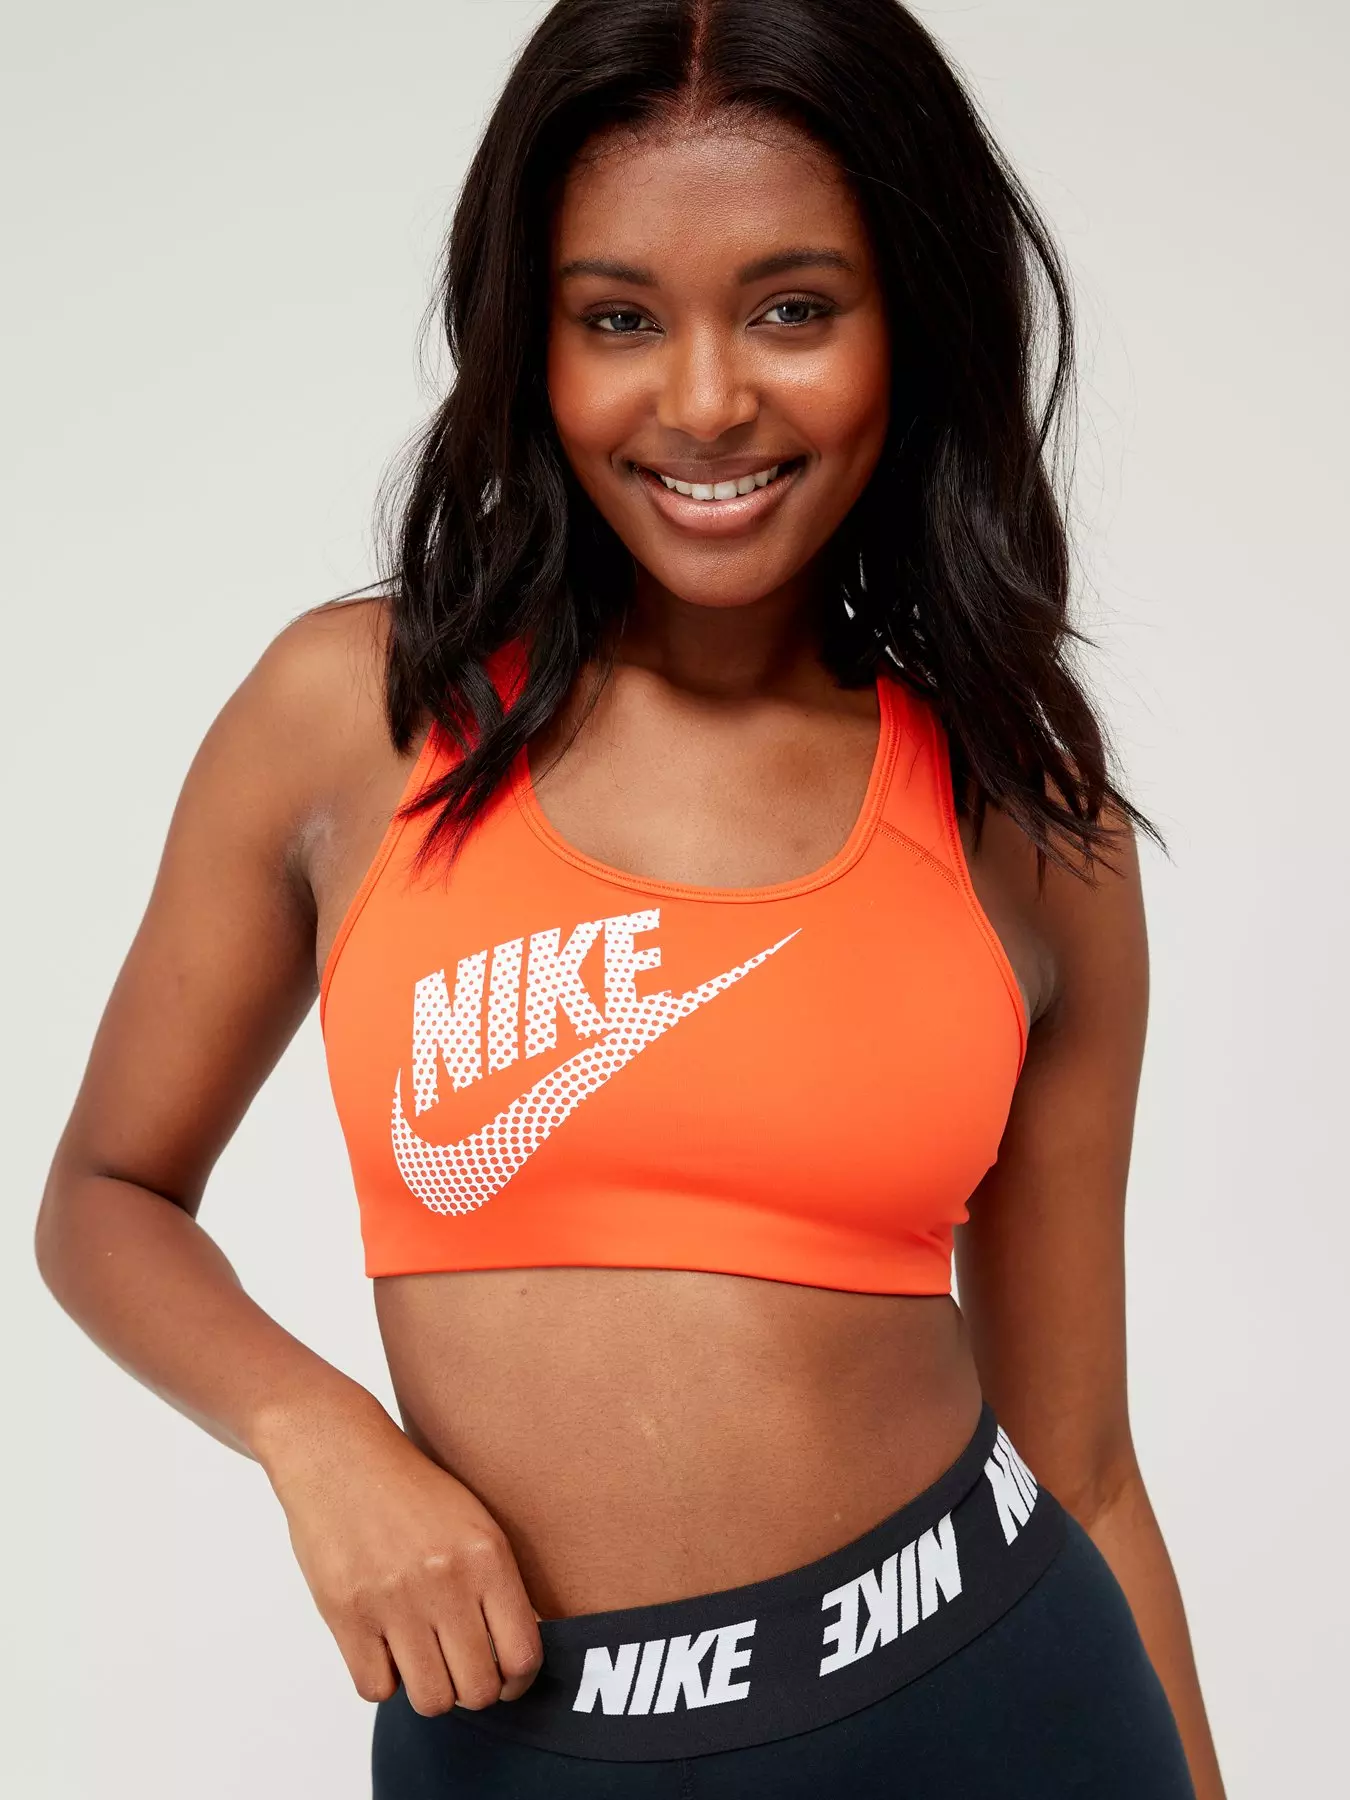 Sports bras, Womens sports clothing, Sports & leisure, Nike